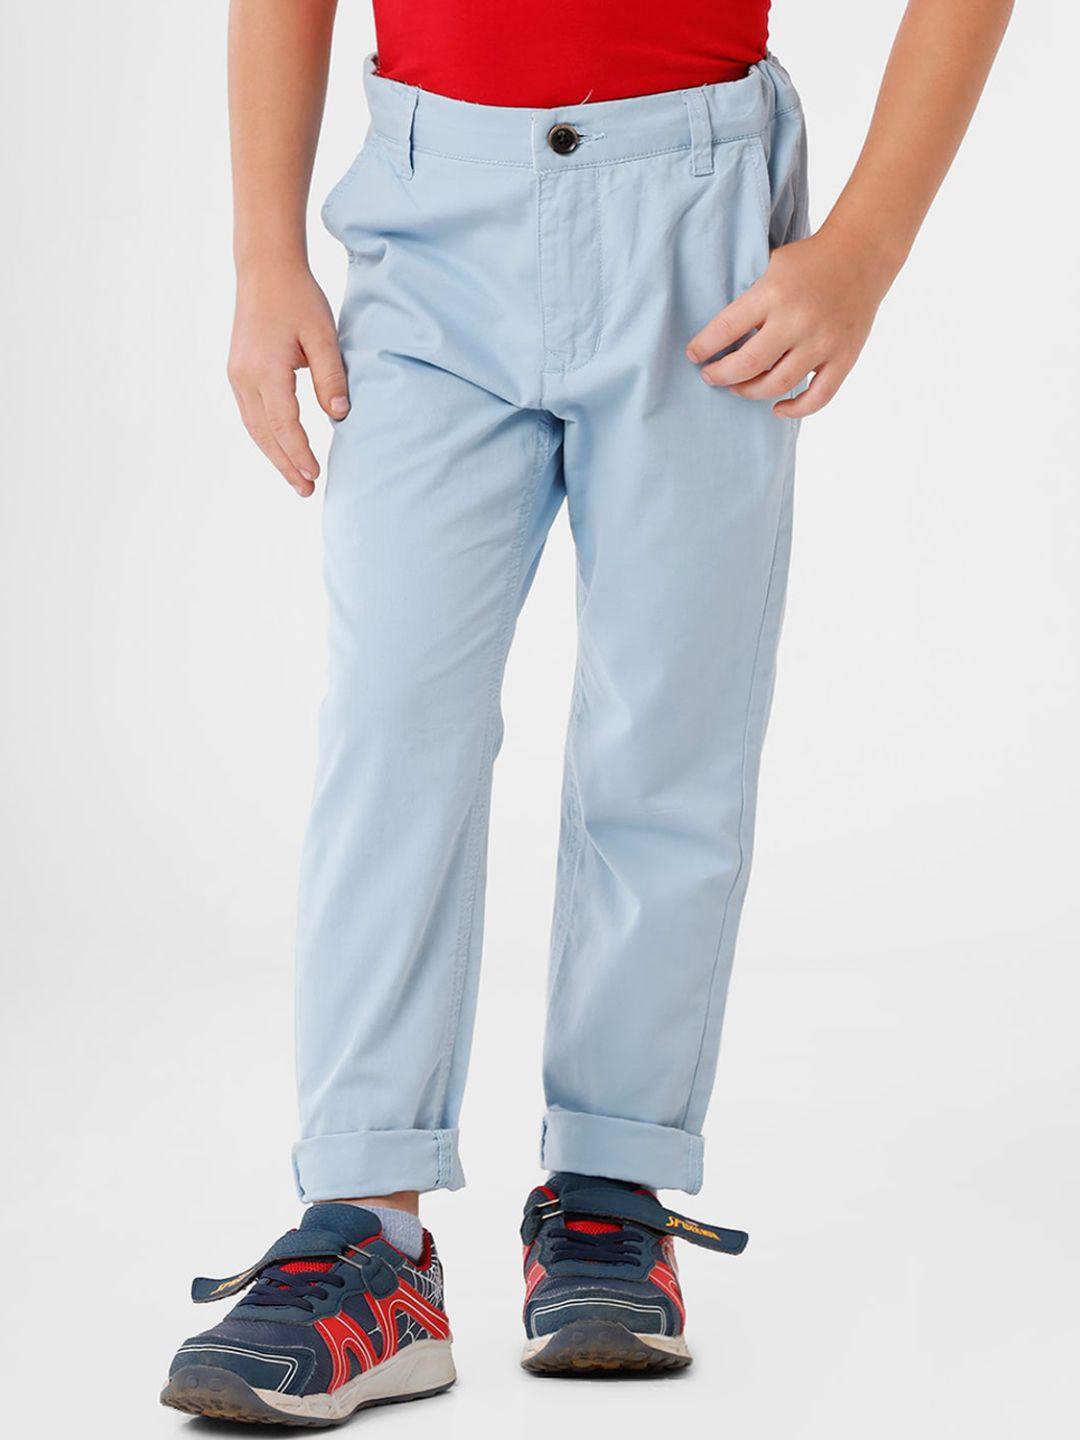 kate & oscar boys blue chinos cotton trousers